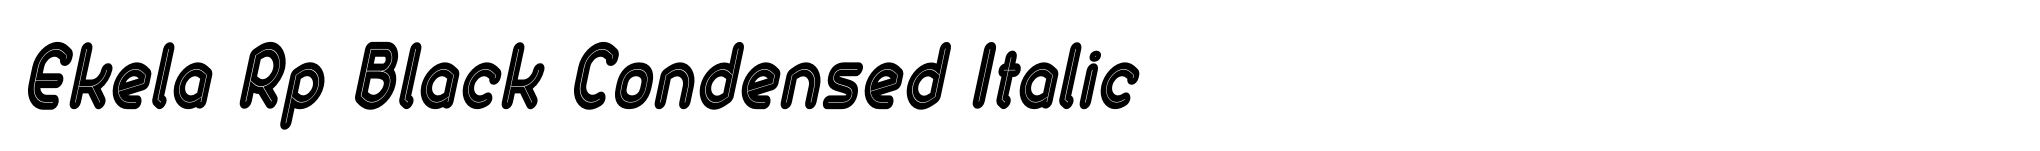 Ekela Rp Black Condensed Italic image